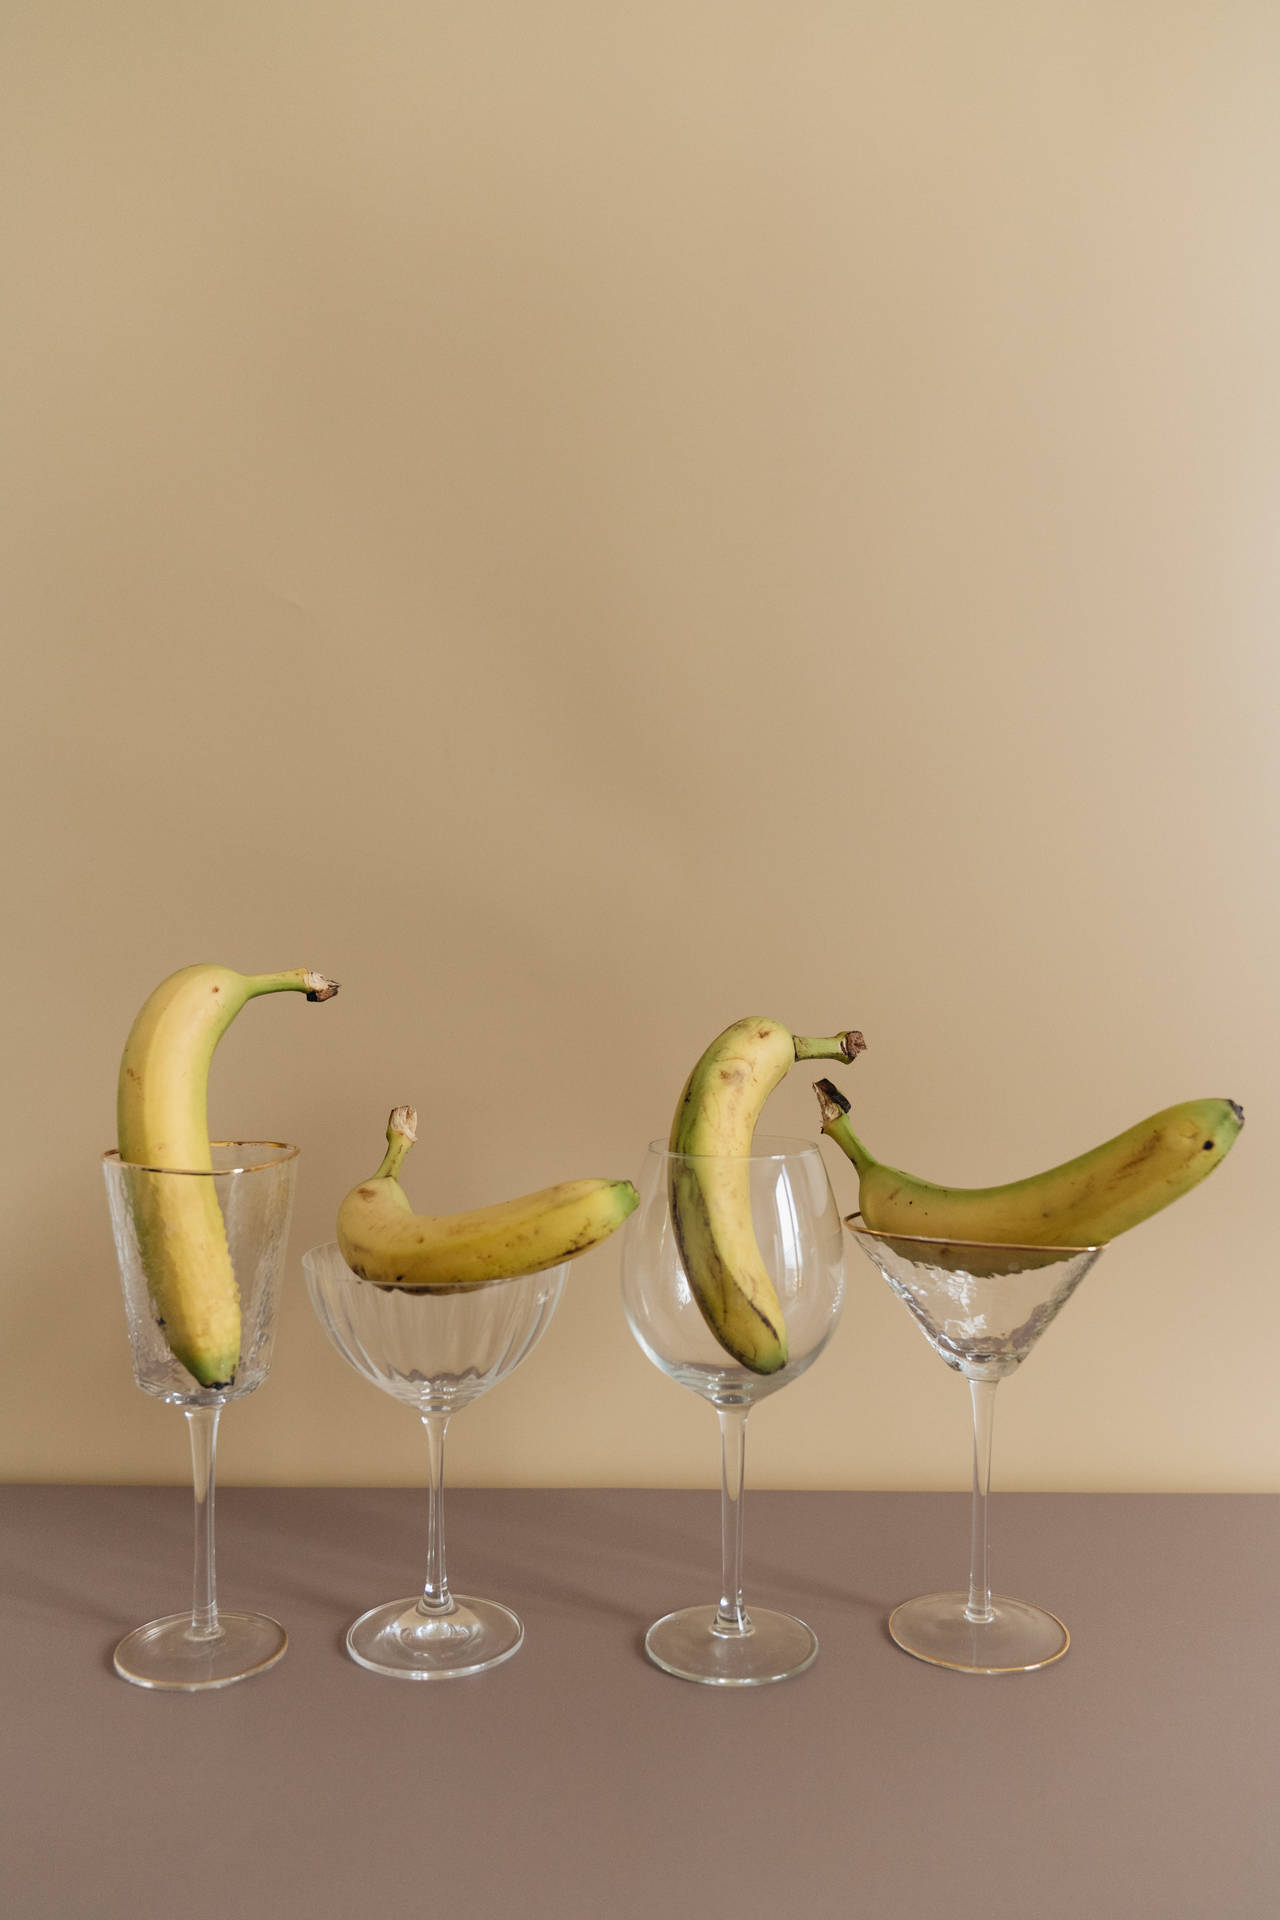 Bananas In Wine Glasses Wallpaper